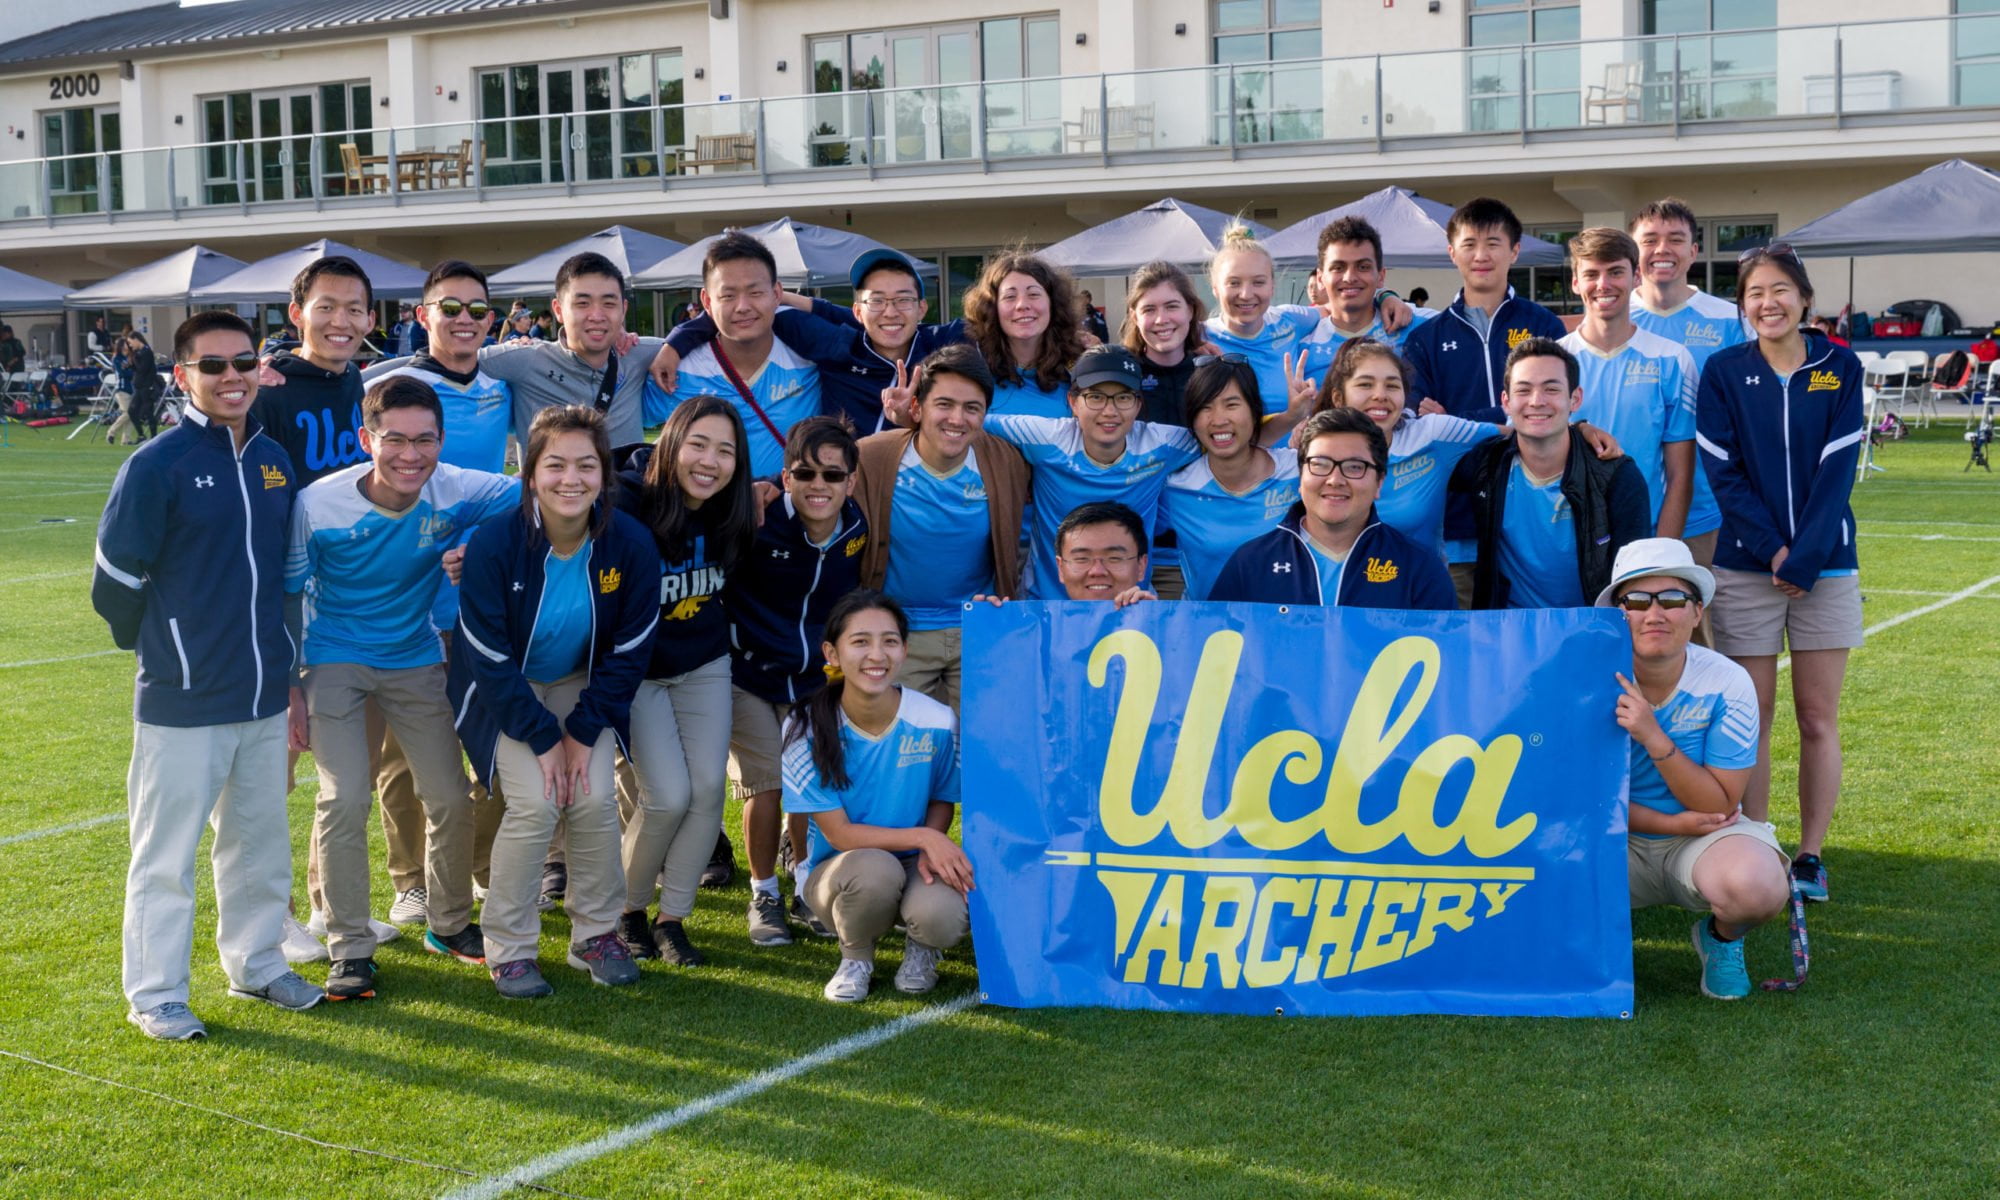 UCLA Club Archery Group Photo - Outside